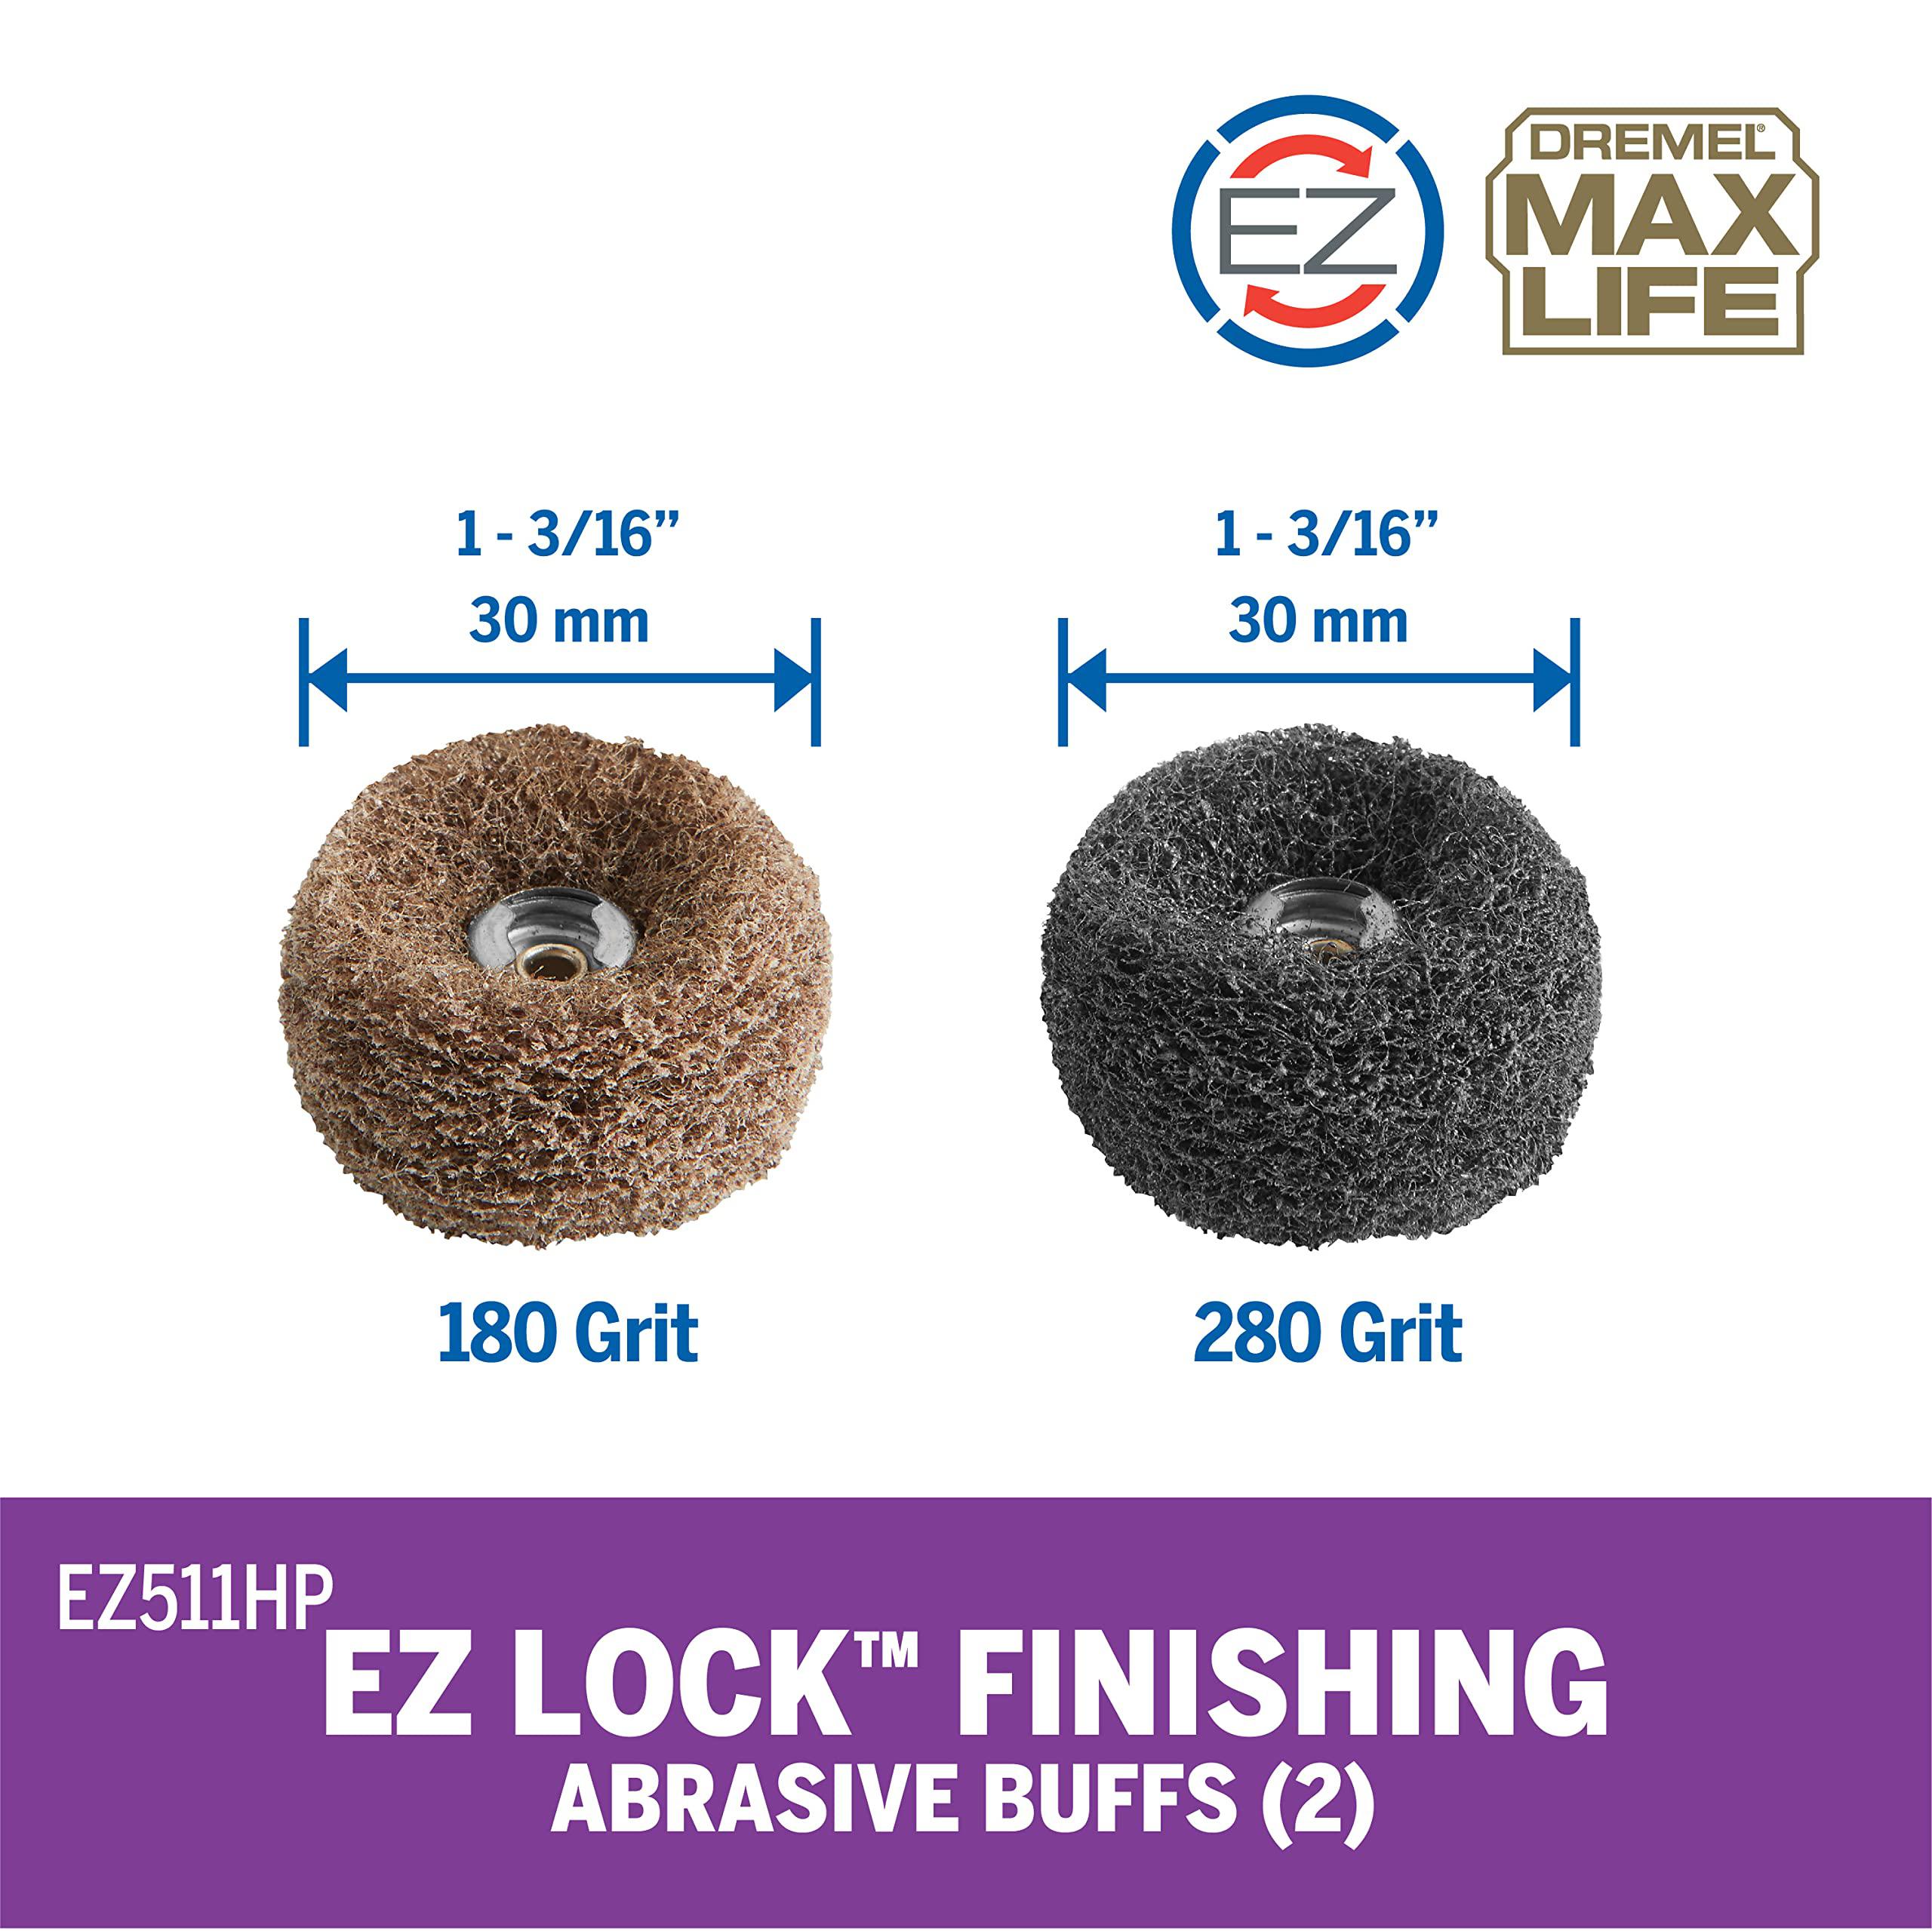 dremel max life 180 & 280 grit finishing abrasive bluff, rotary tool accessories - ez511hp